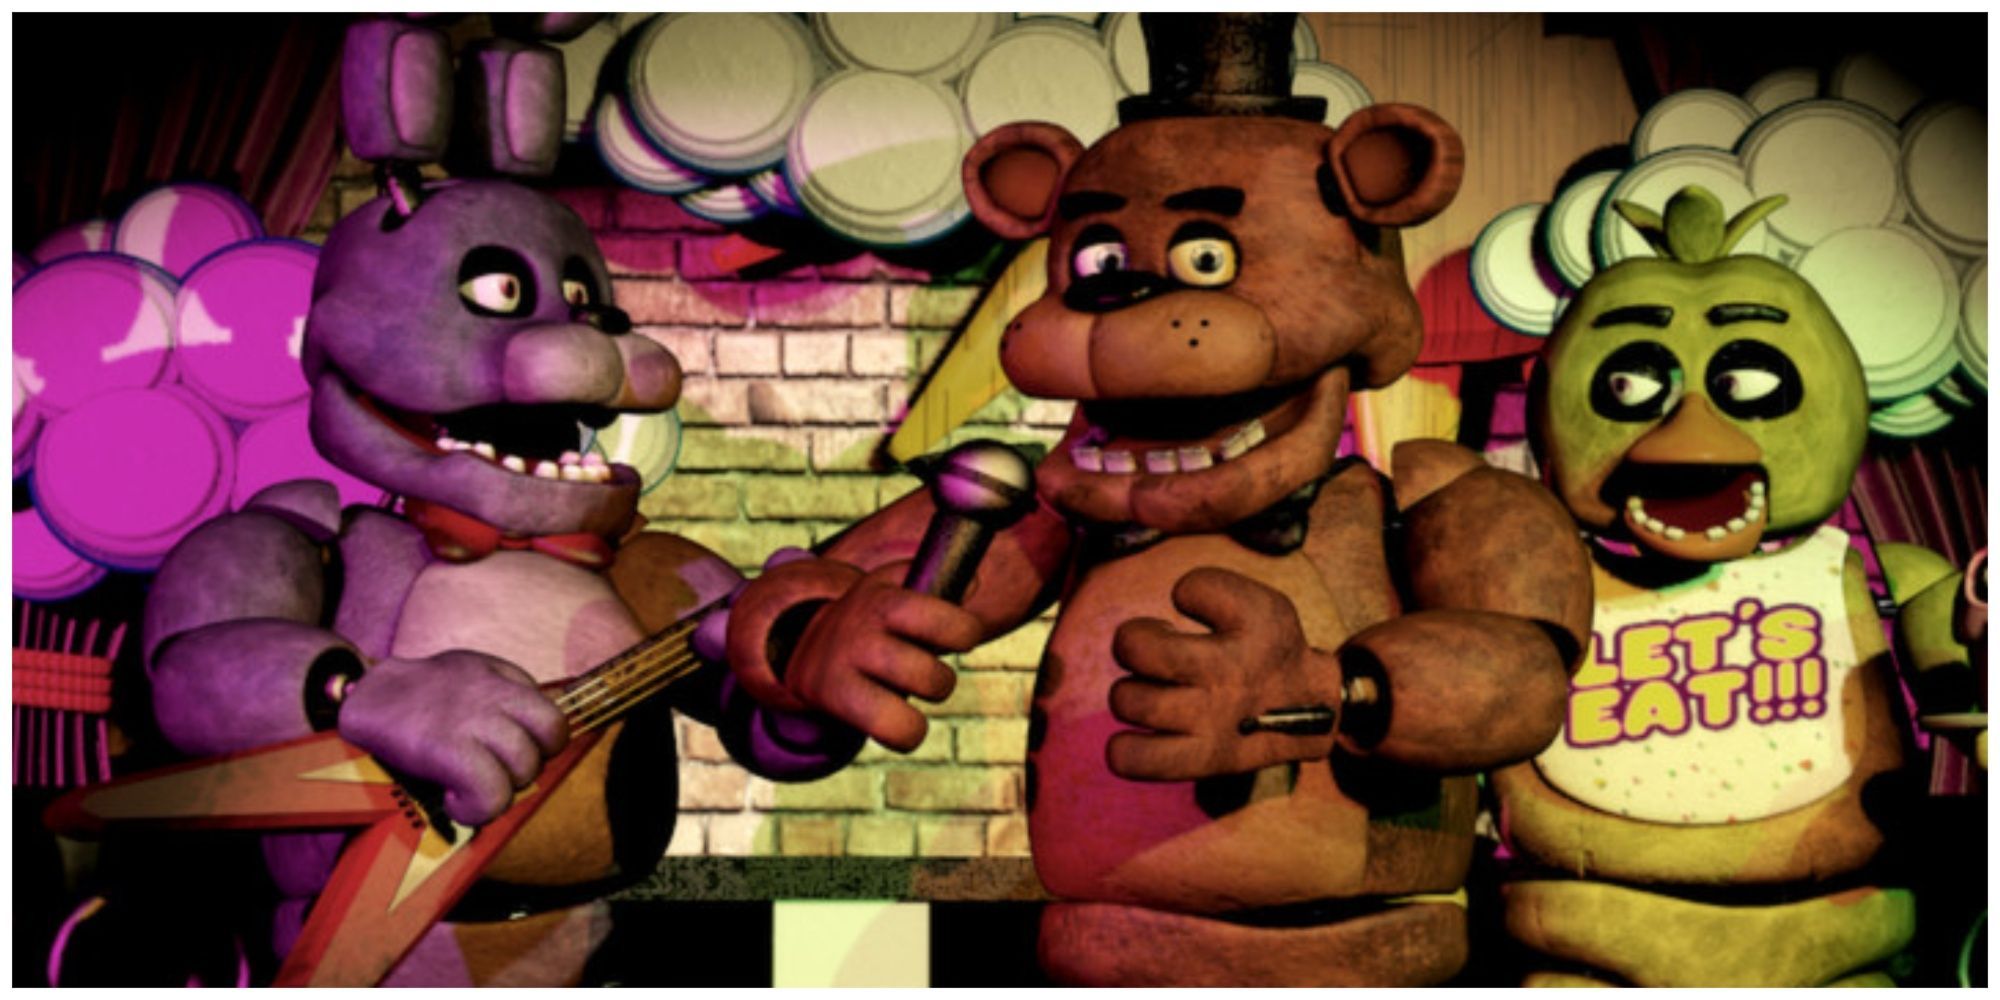 Five Nights at Freddy's Animatronics